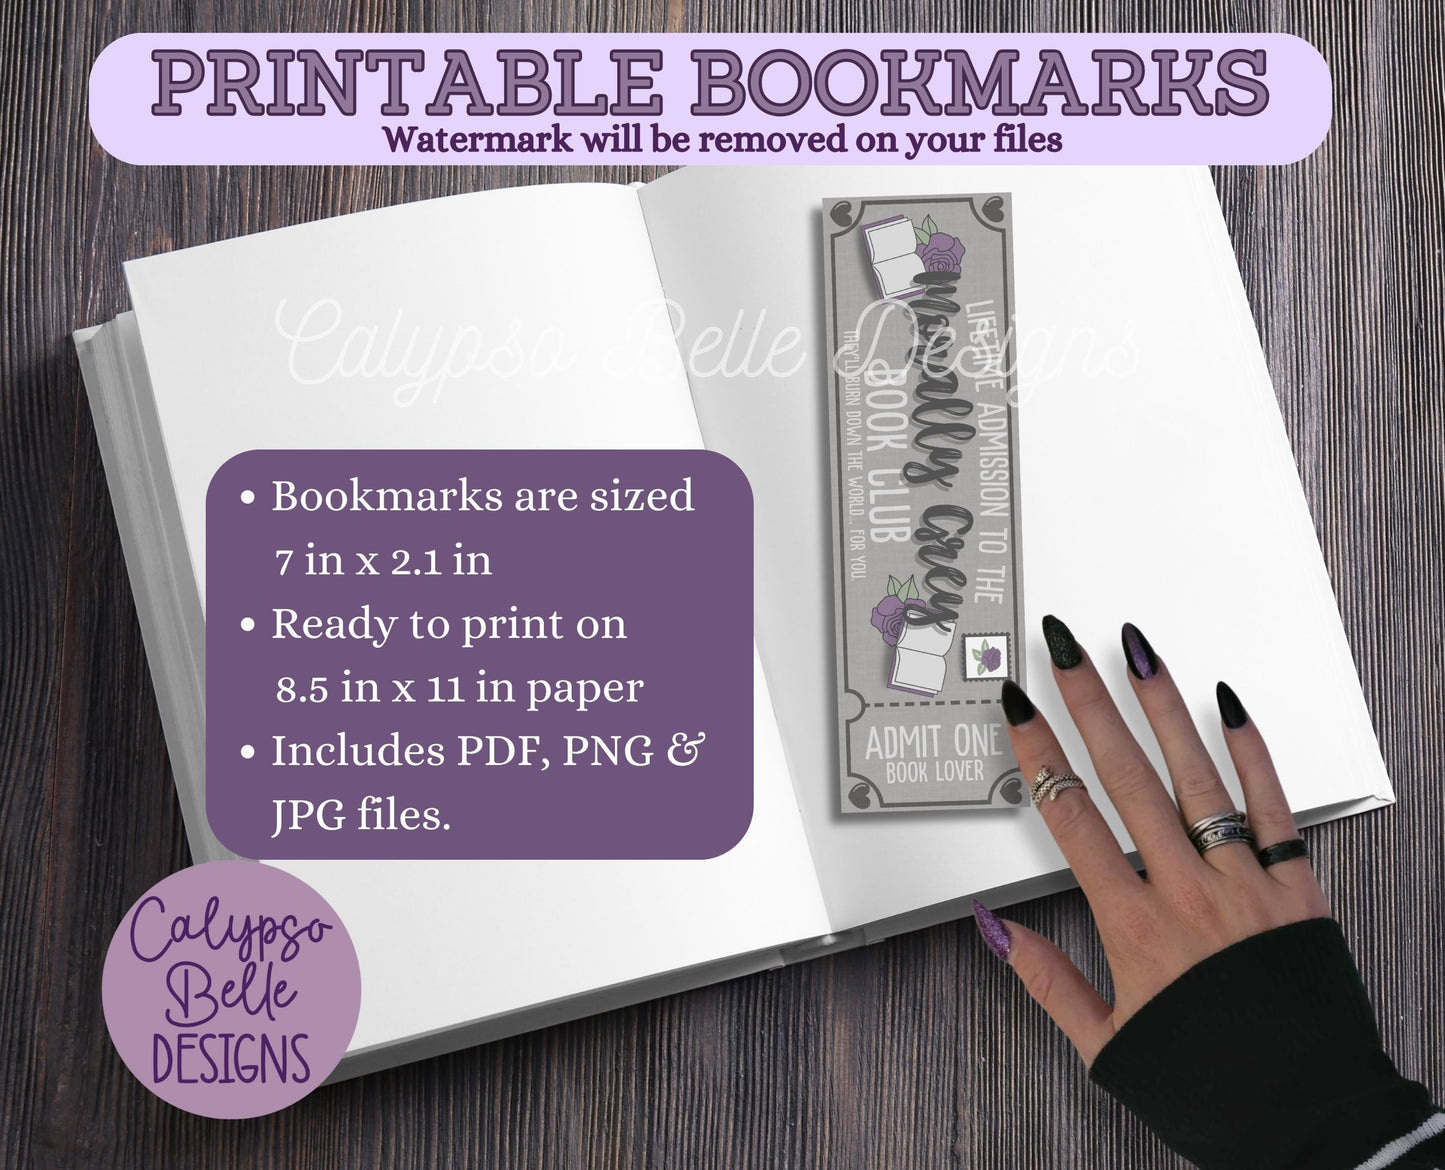 Admit One Romance Book Club Printable Bookmarks, Enemies to Lovers Bundle